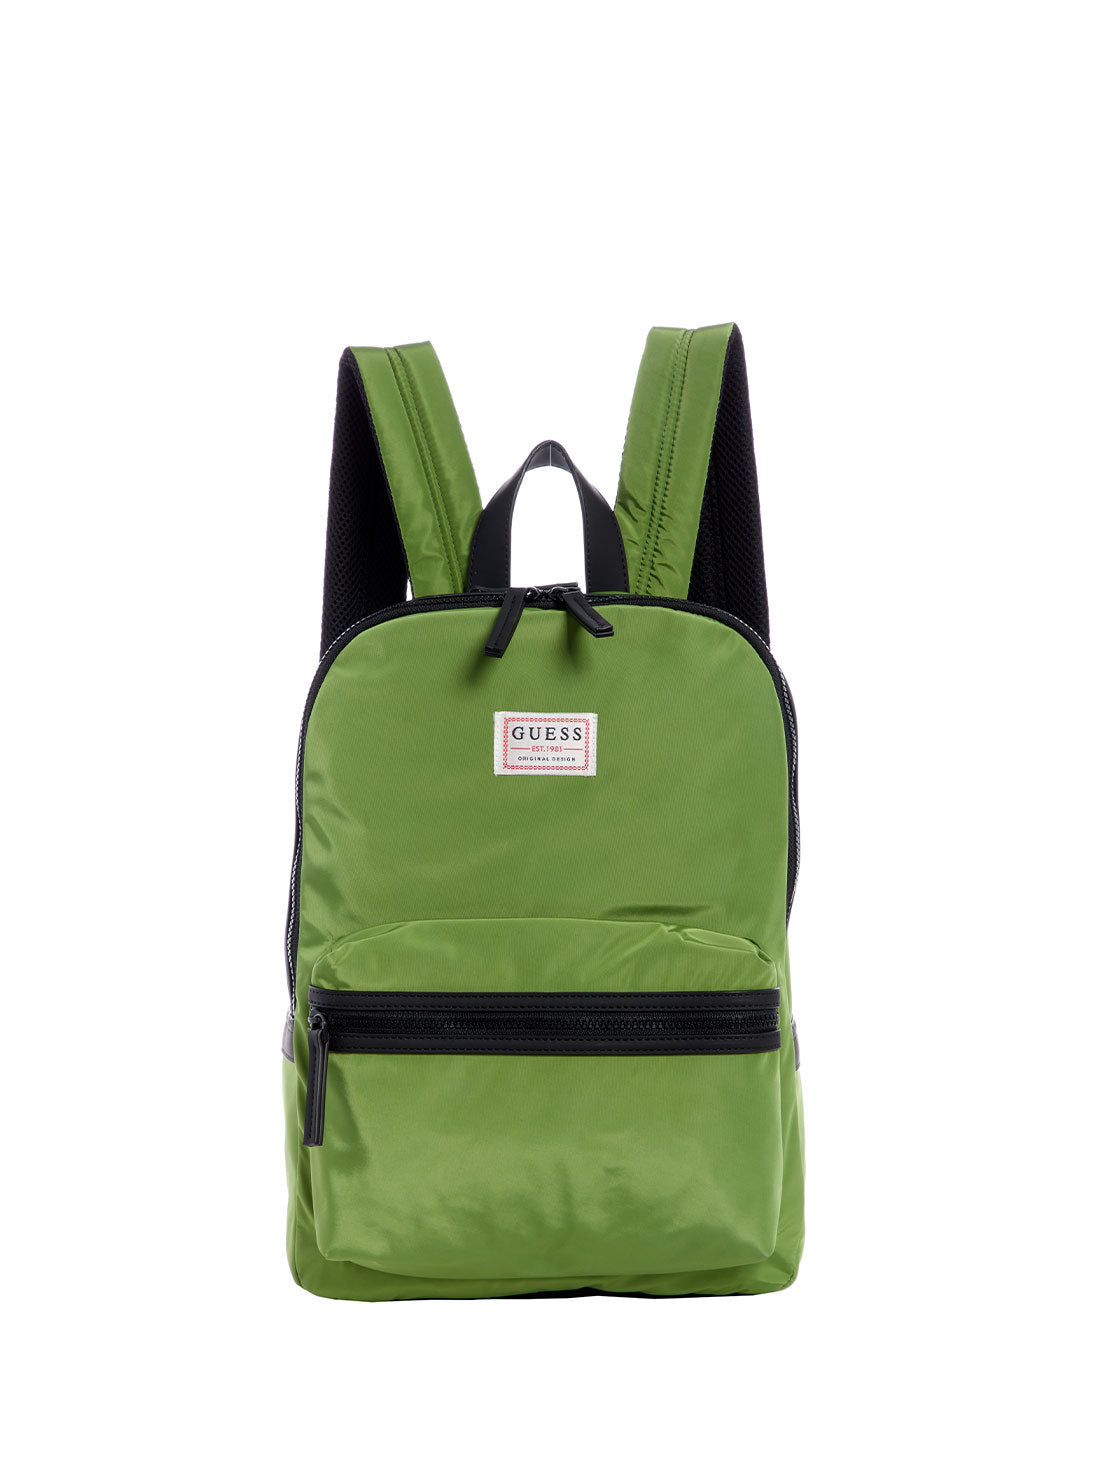 Green Originals Backpack Mens front view